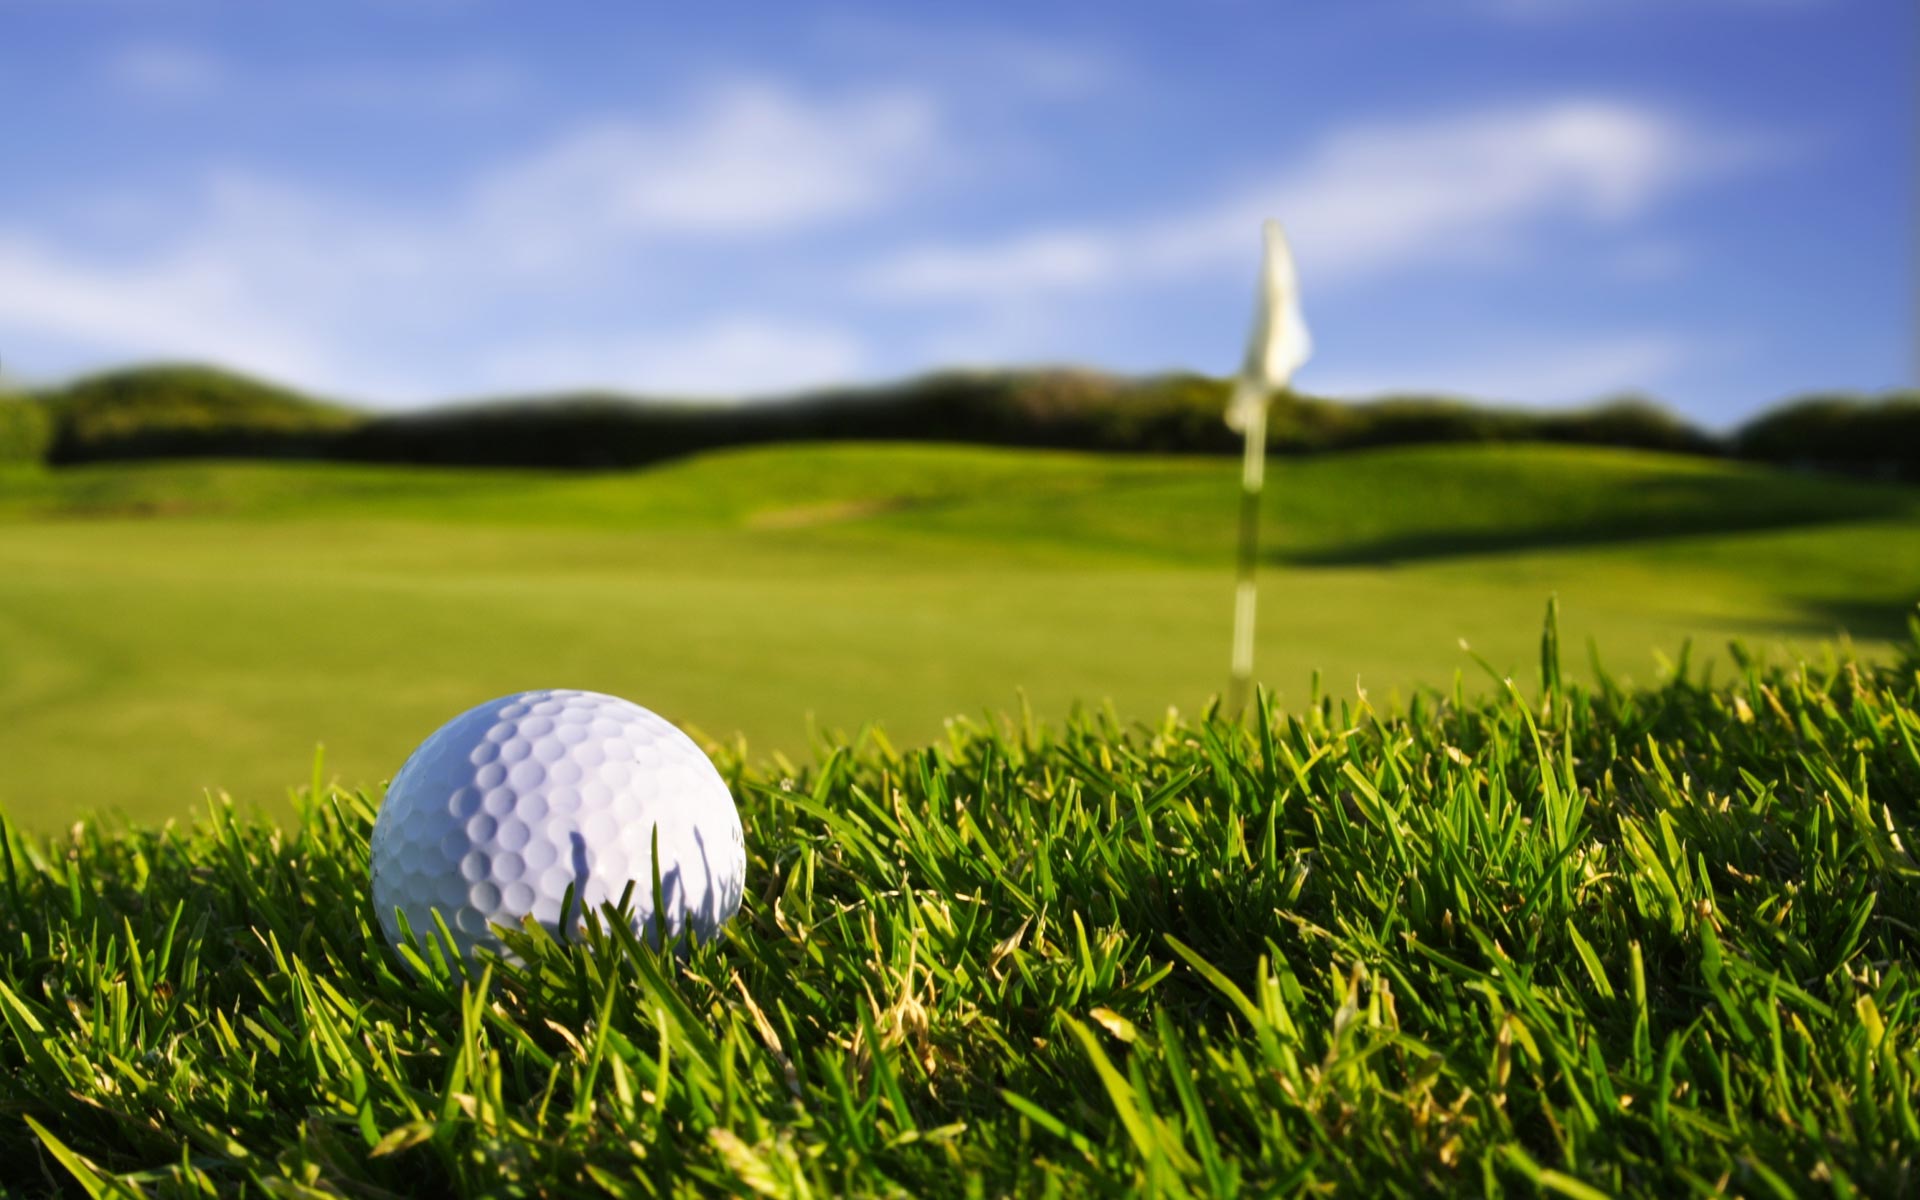 HD Golf Course Wallpaper In Sports Imageci